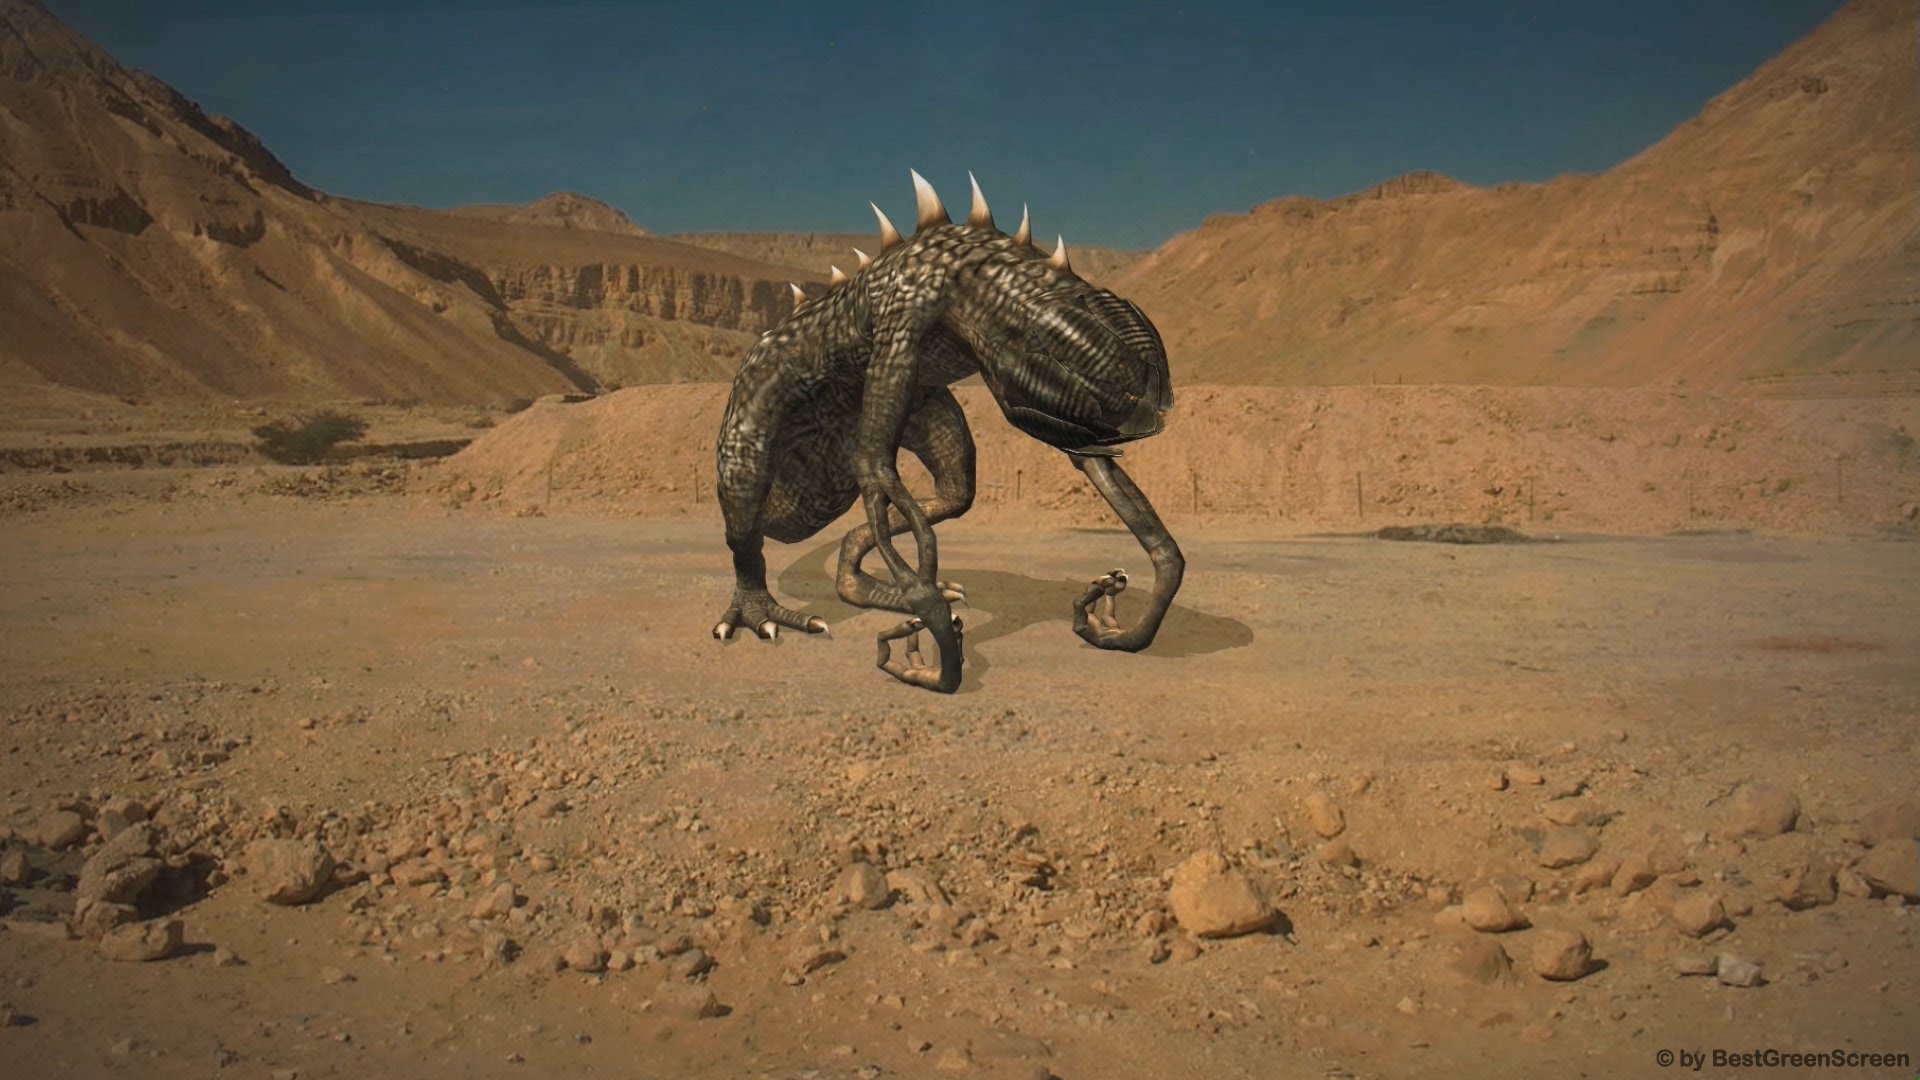 Alien Monster Creature in the desert discovered ...... - YouTube